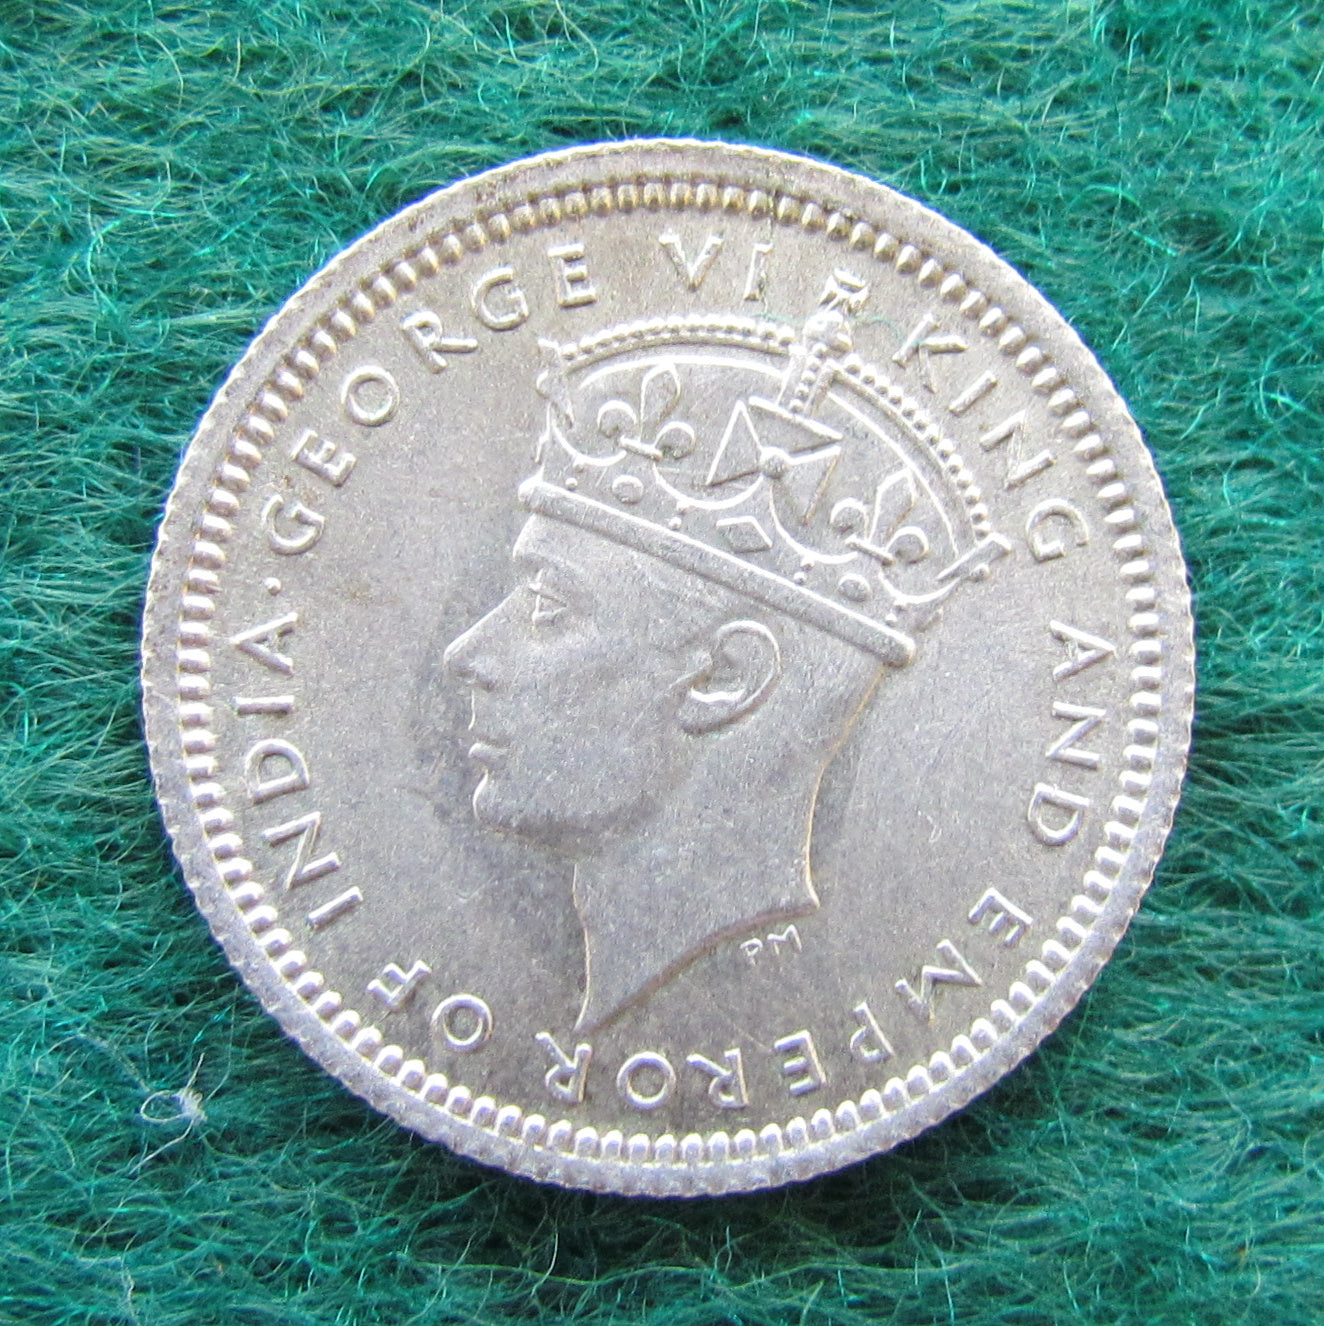 Malaya 1945 5 Cent King George VI Coin - Circulated